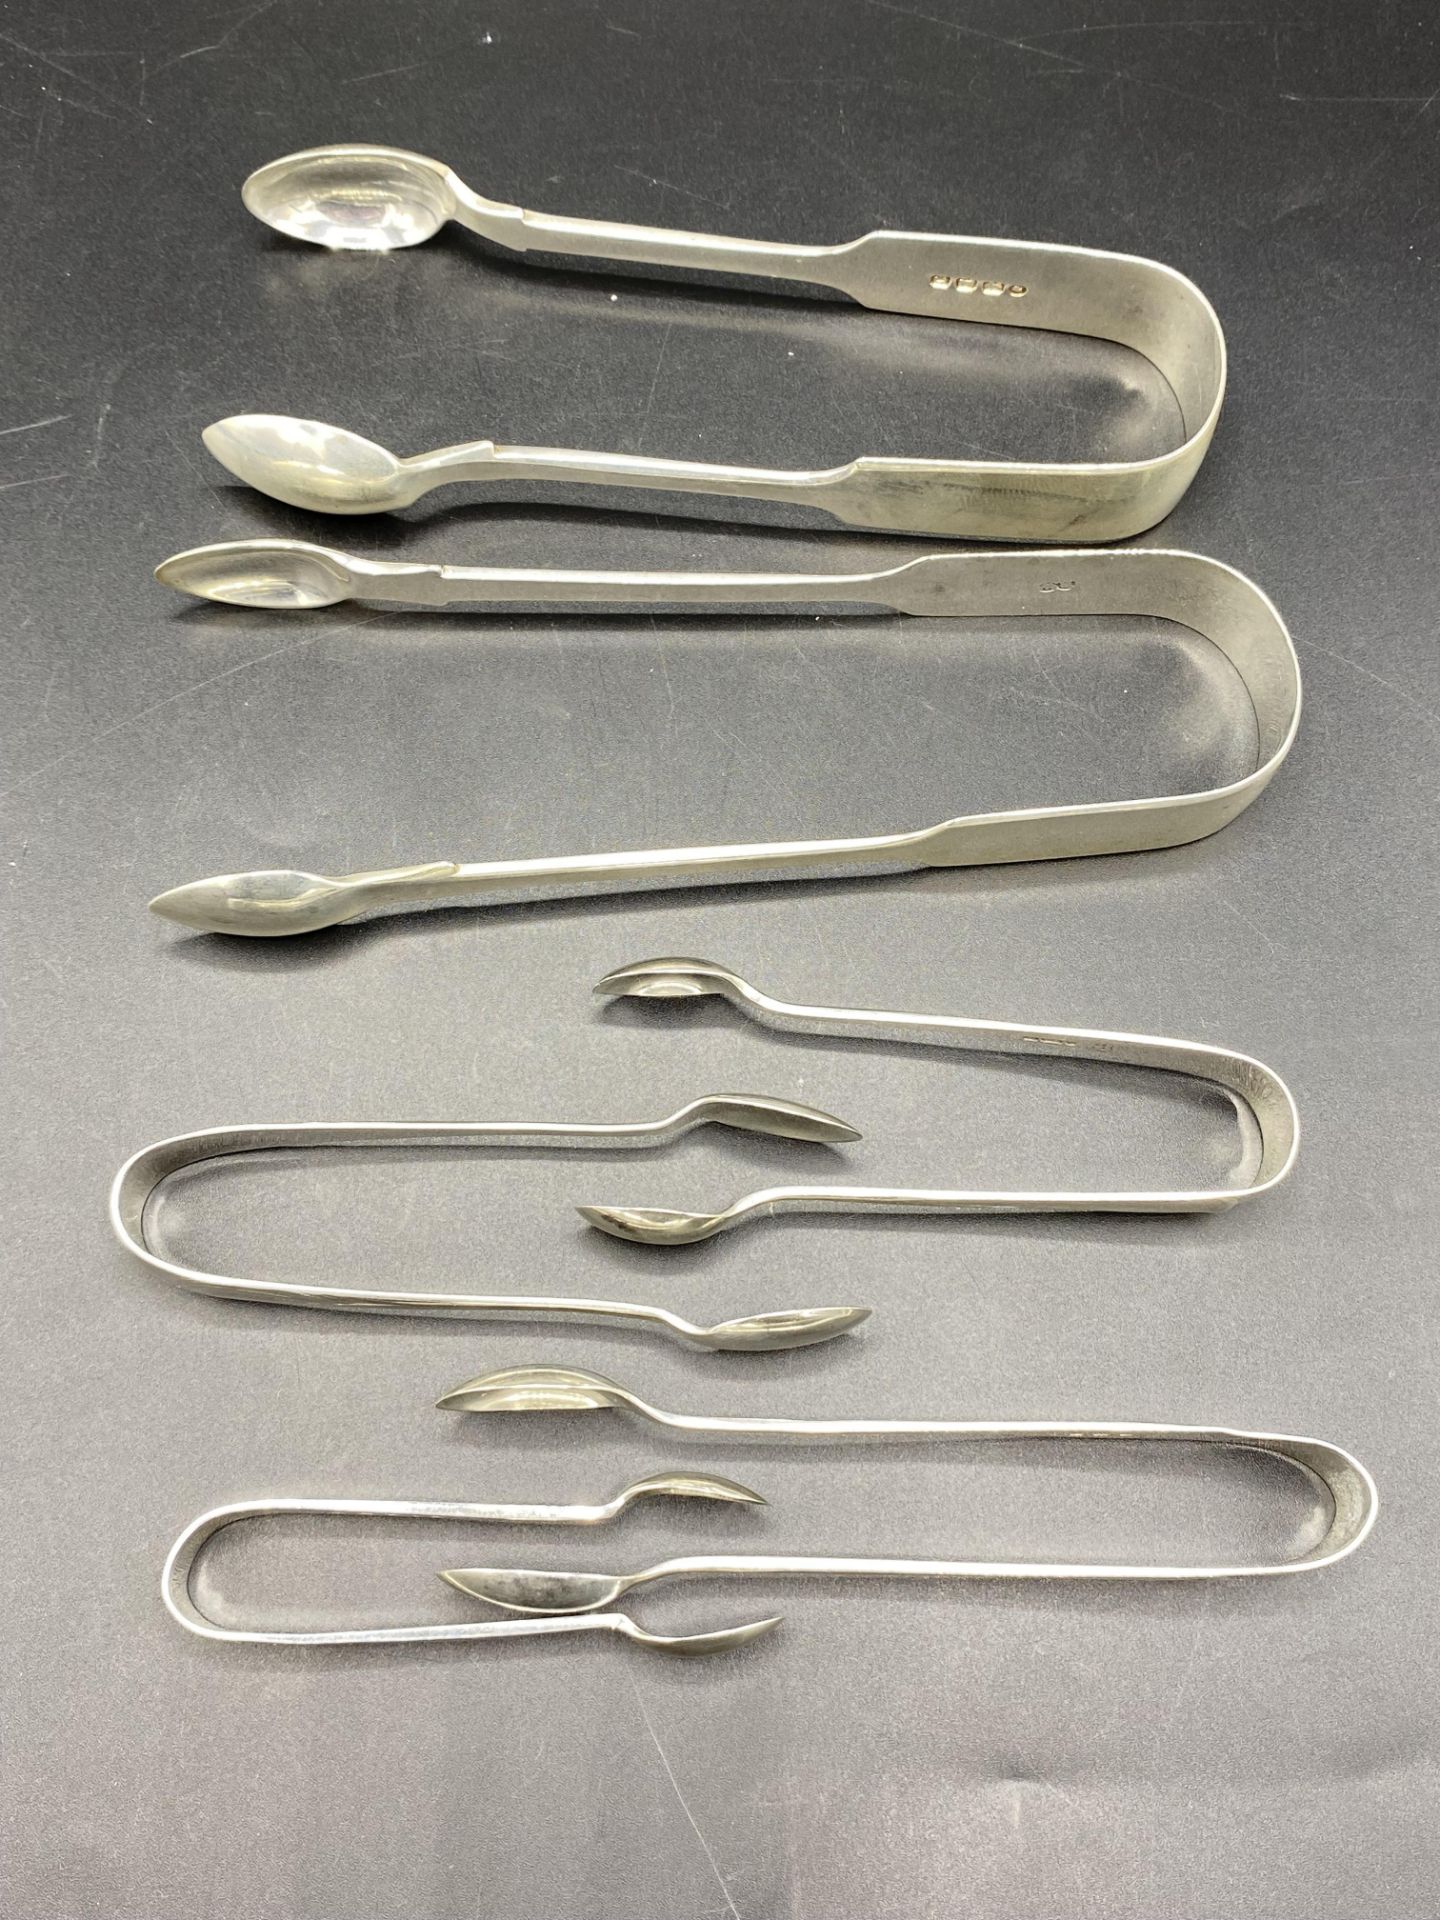 Six pair of silver sugar tongs - Image 3 of 3